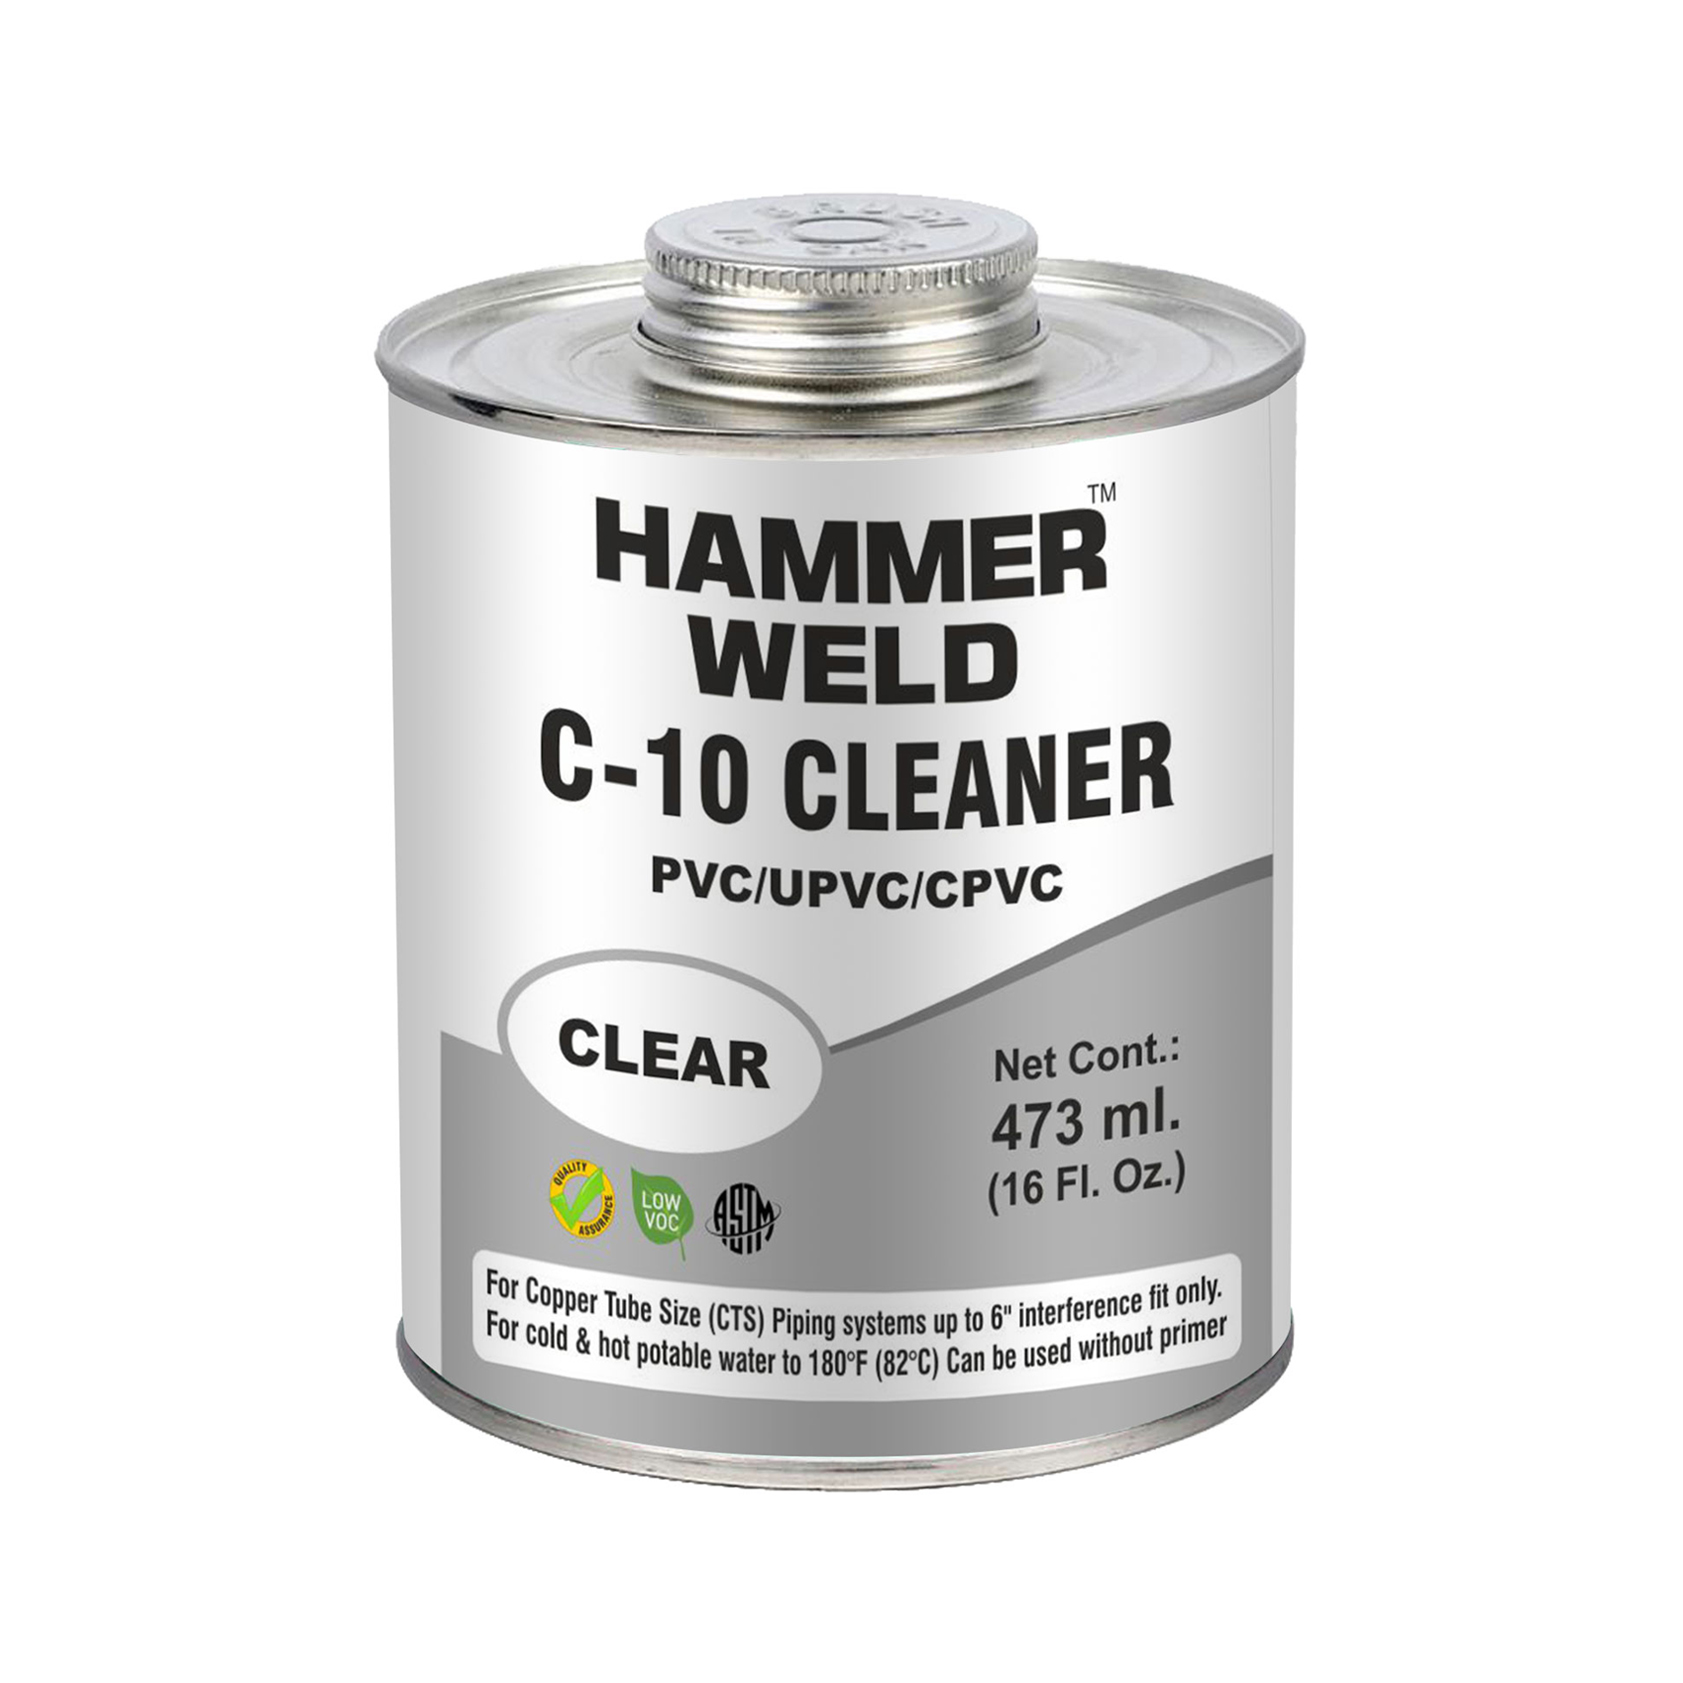 HammerWeld C-10 Cleaner